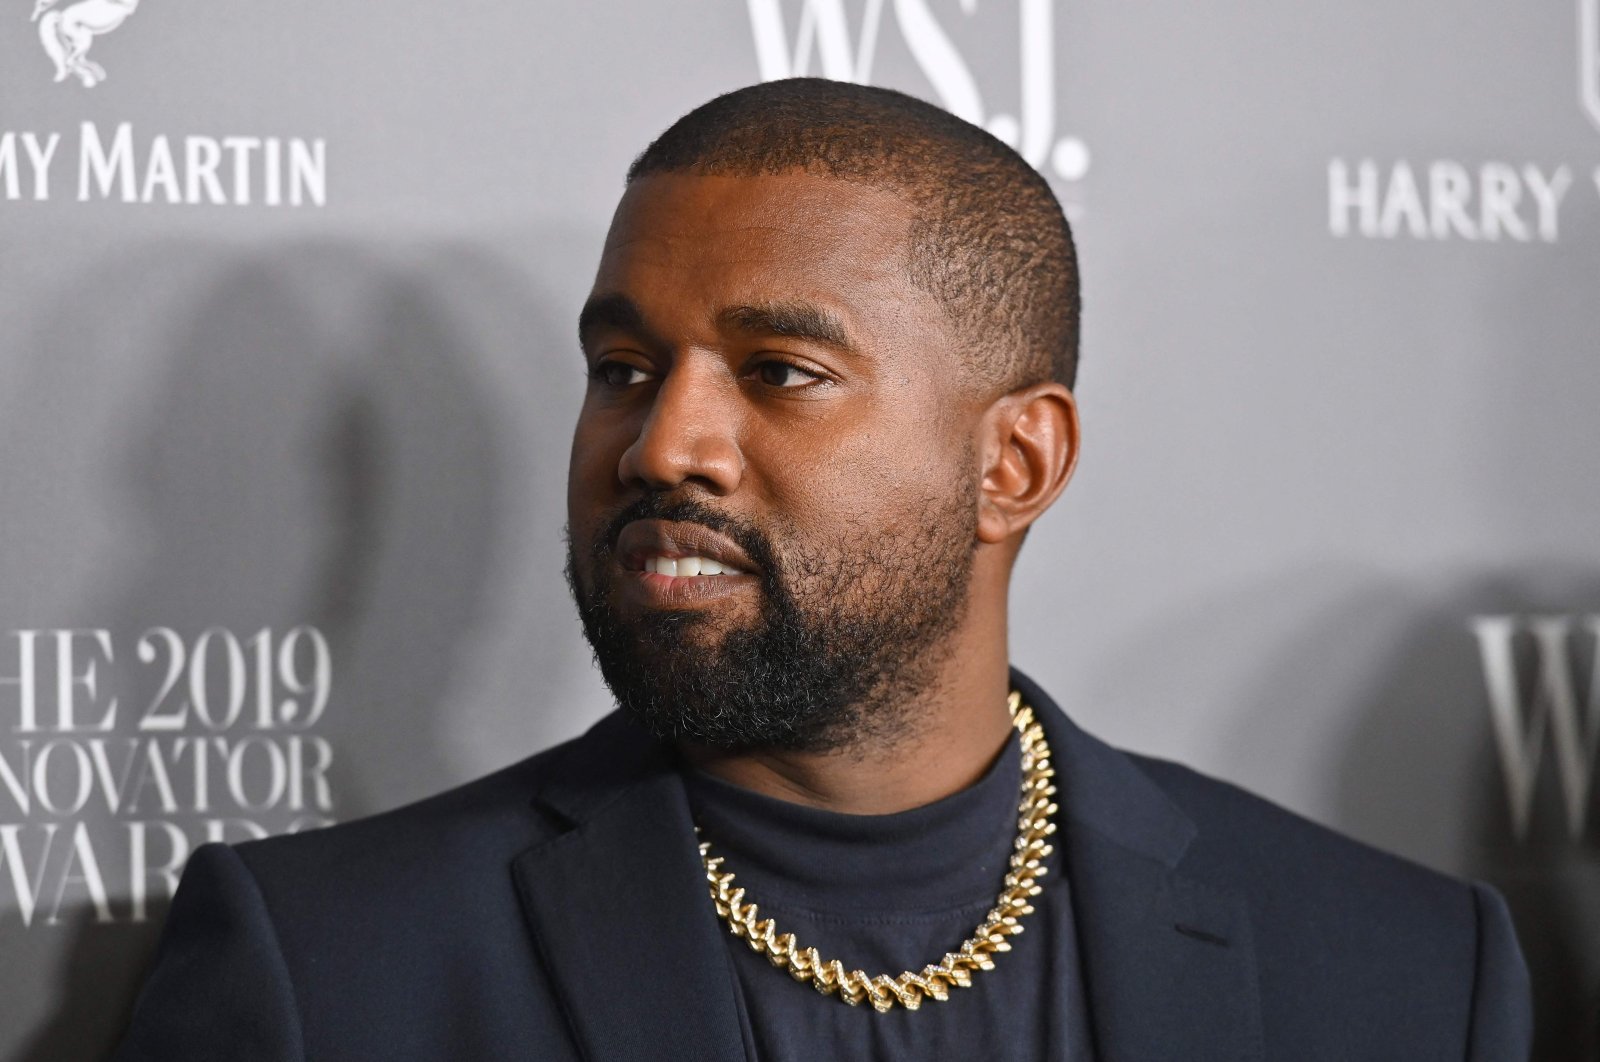 U.S. rapper Kanye West attends the WSJ Magazine 2019 Innovator Awards at MOMA, New York City, New York, U.S., Nov. 6, 2019. (AFP Photo)